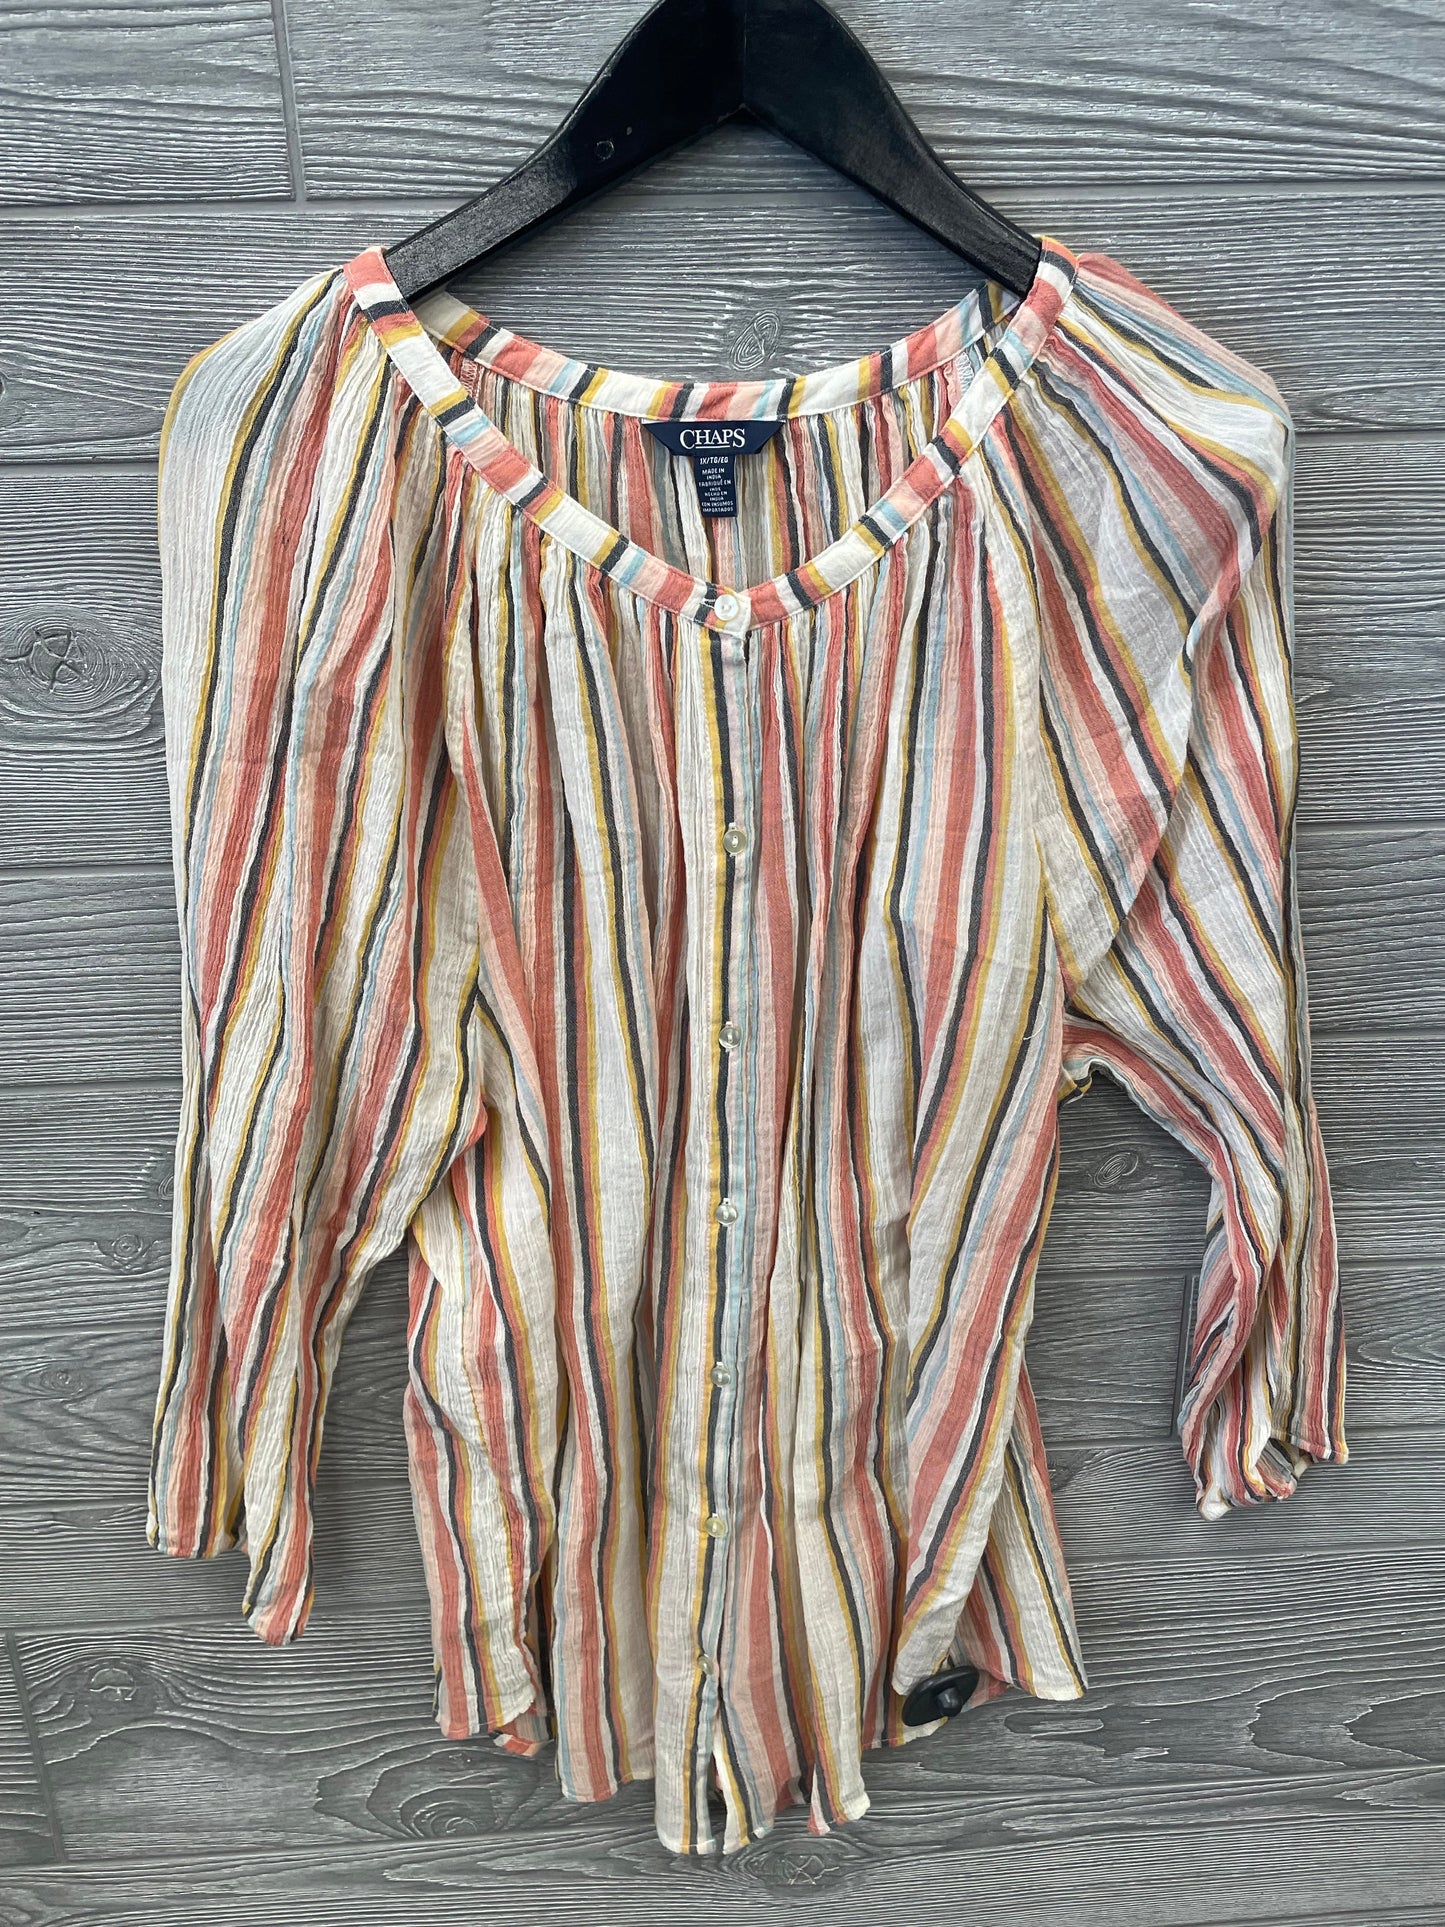 Striped Pattern Top Long Sleeve Chaps, Size 1x